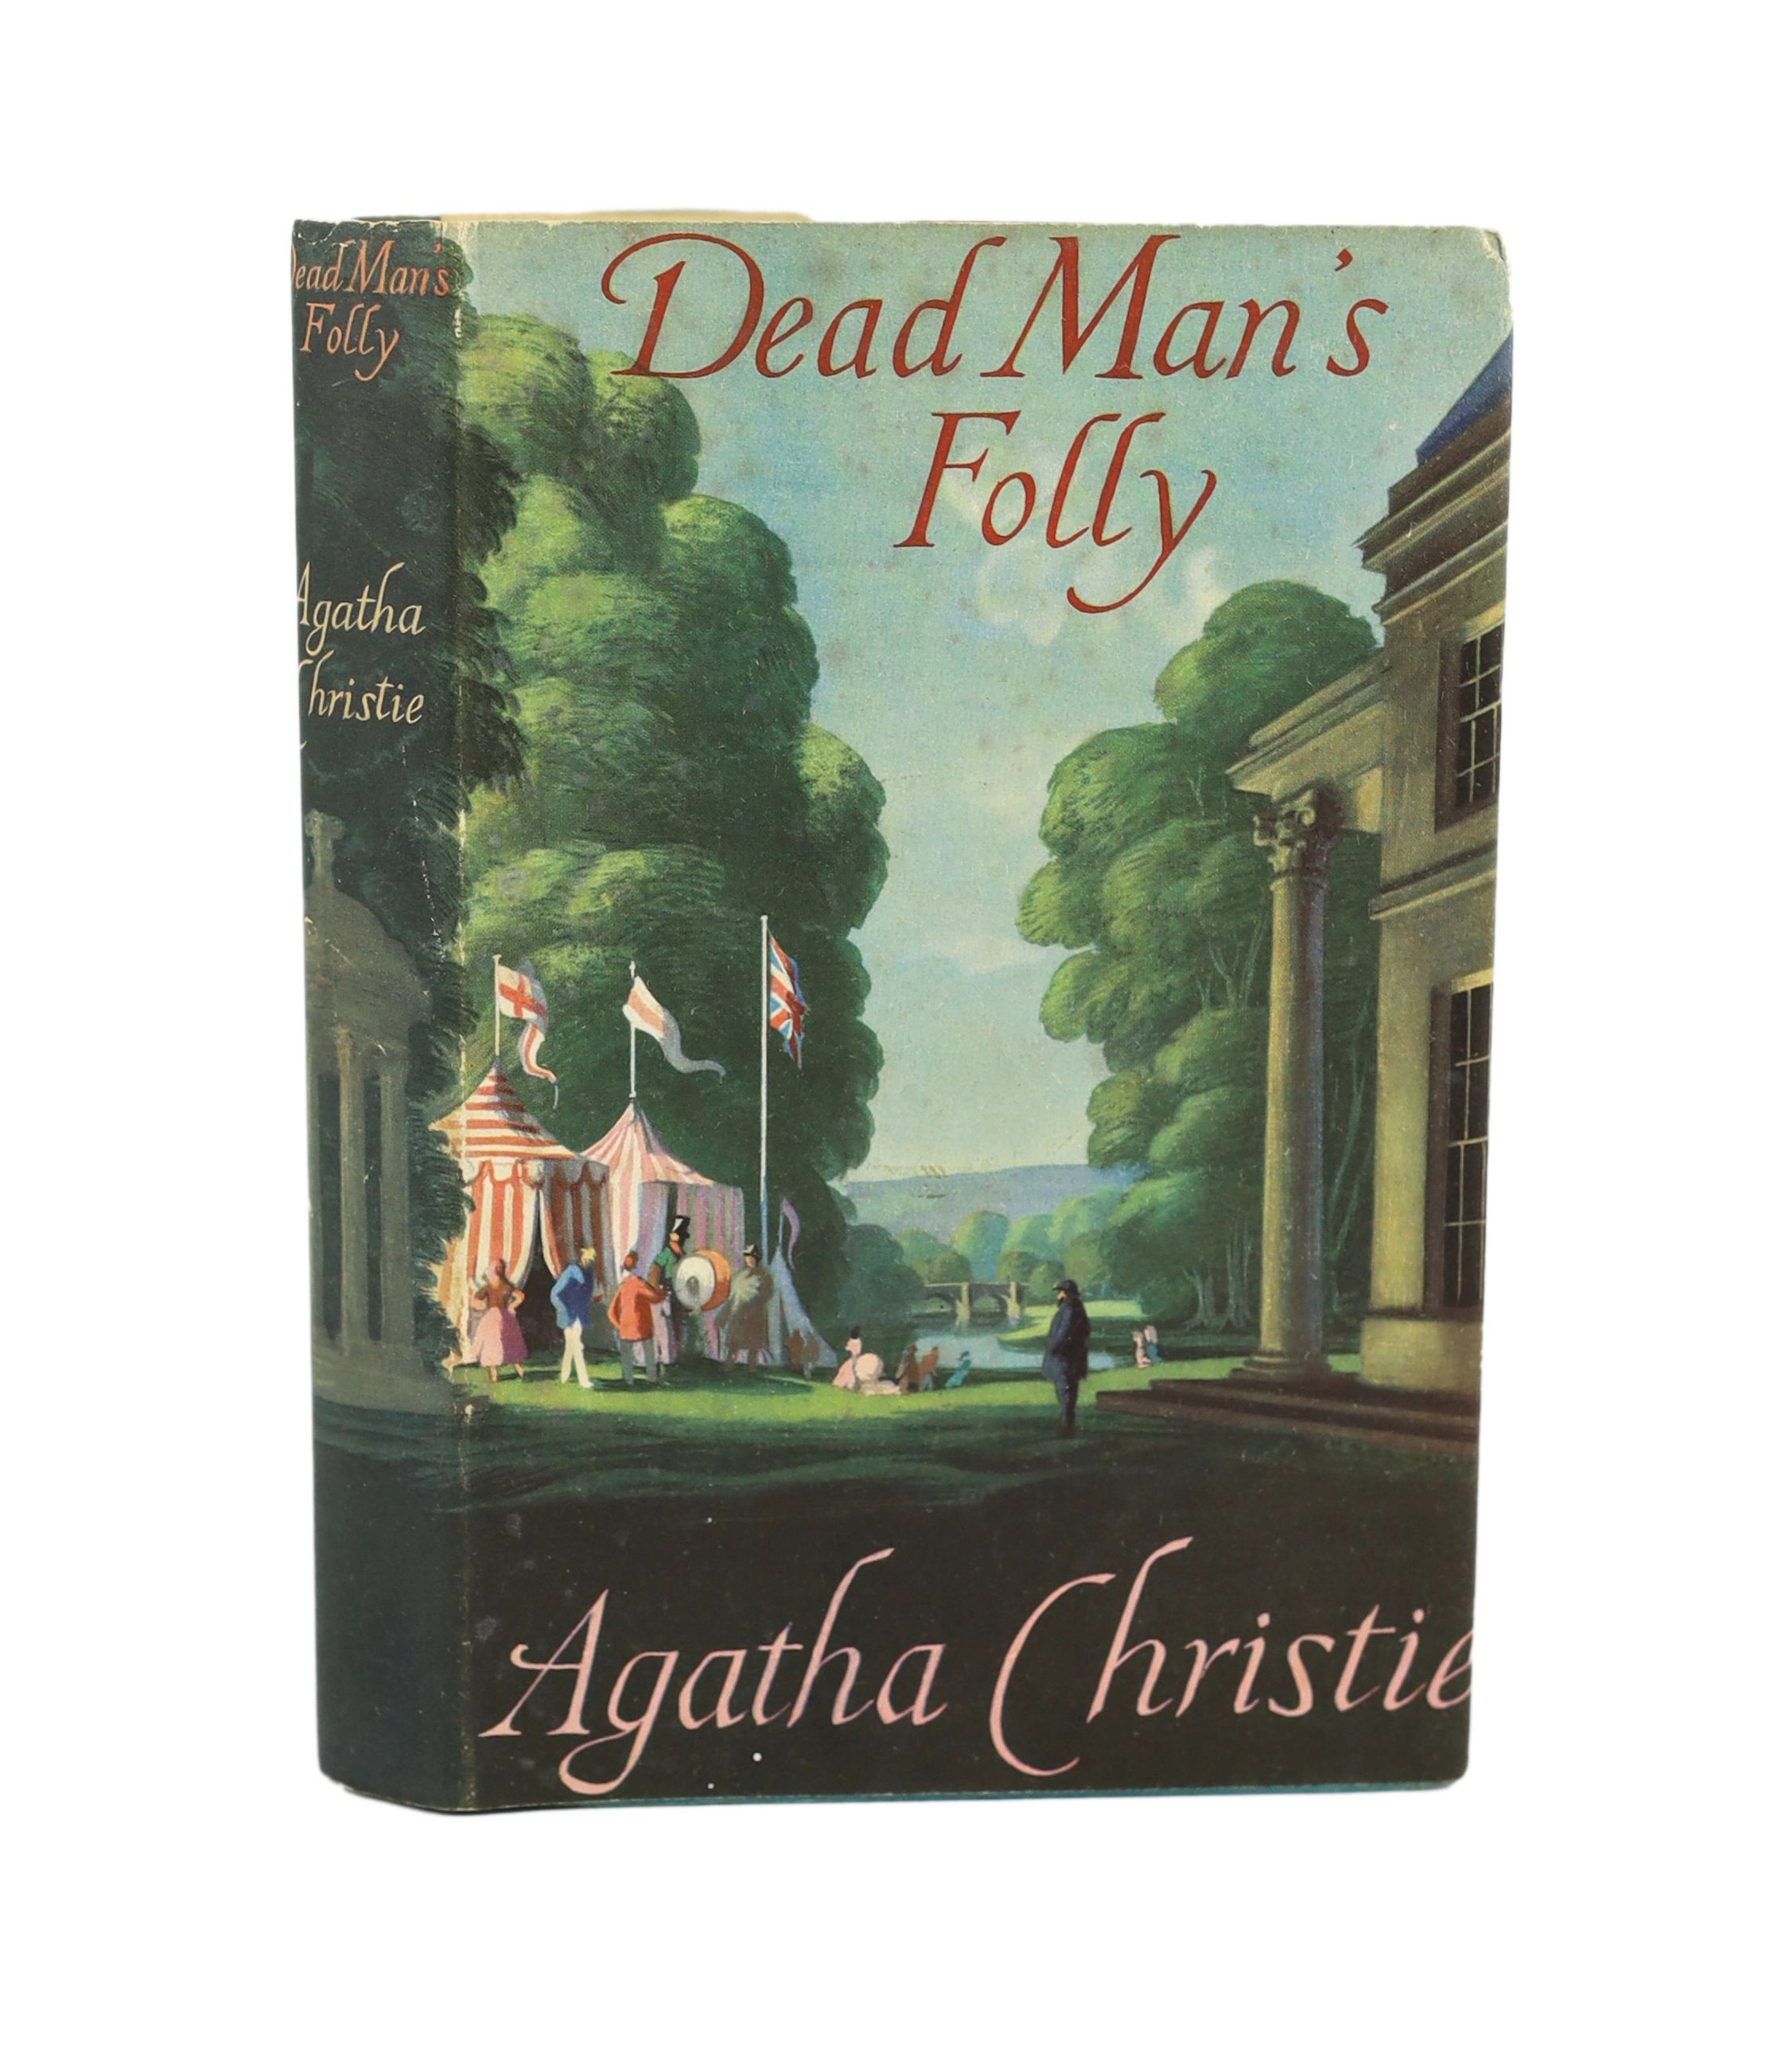 Christie, Agatha - Dead Man's Folly, 1957                                                                                                                                                                                   